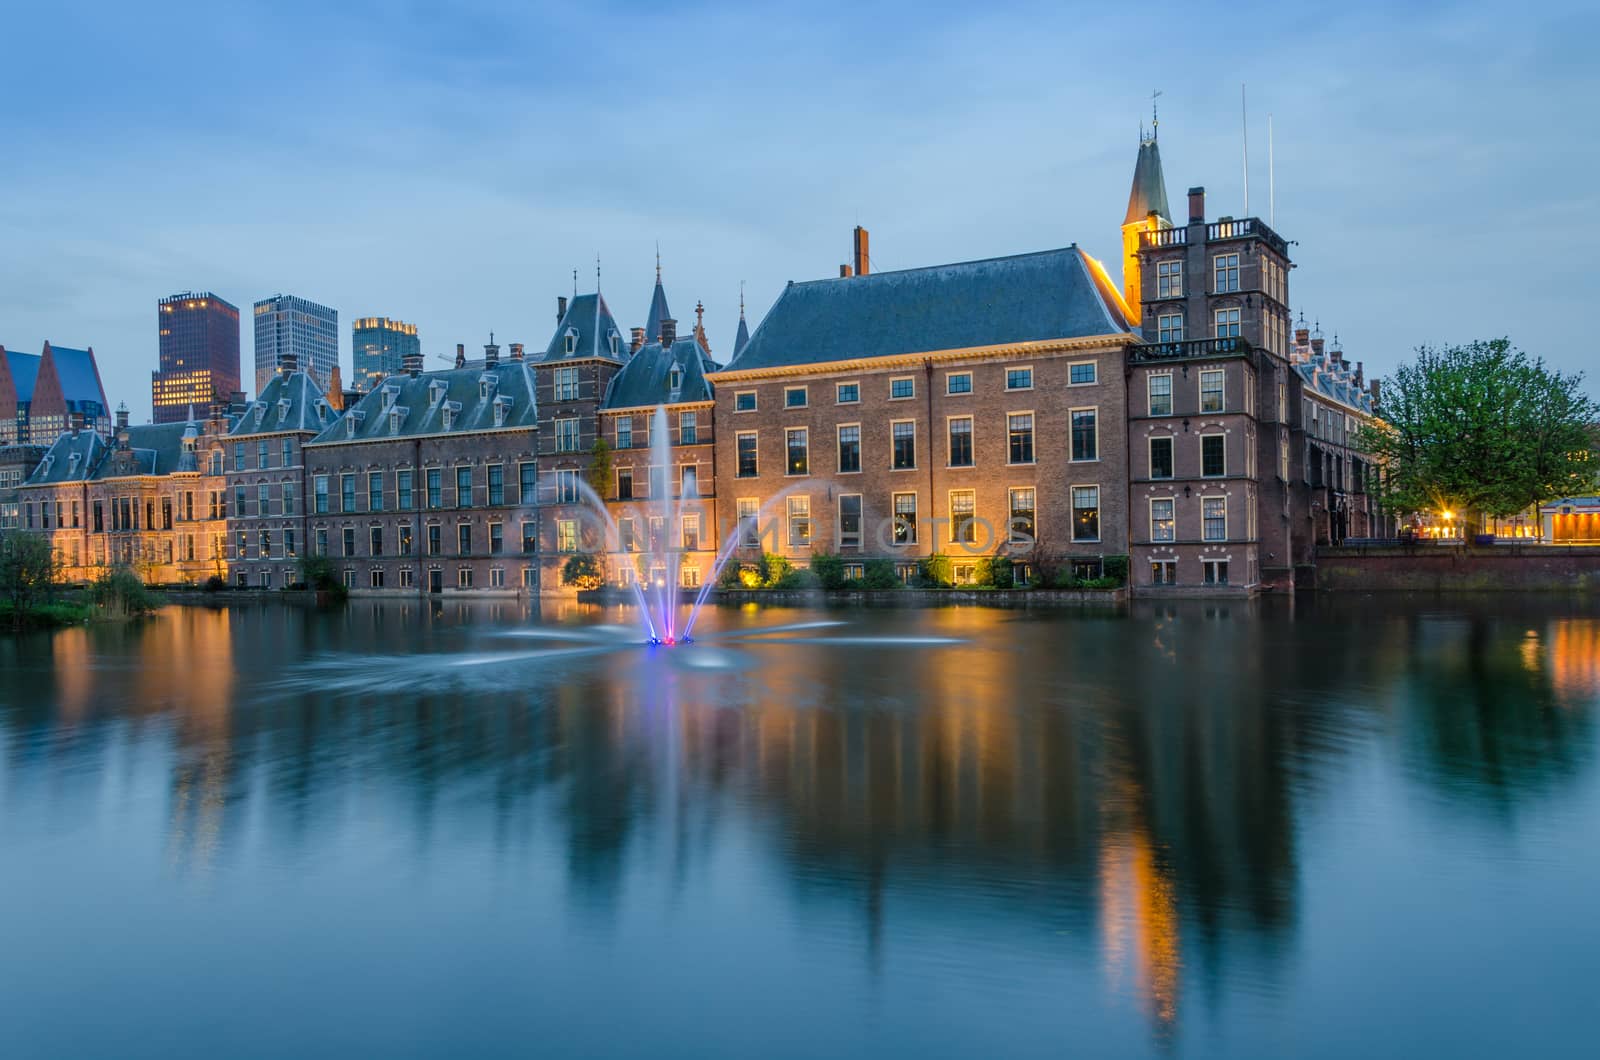 Binnenhof palace, place of Parliament at Dusk  by siraanamwong